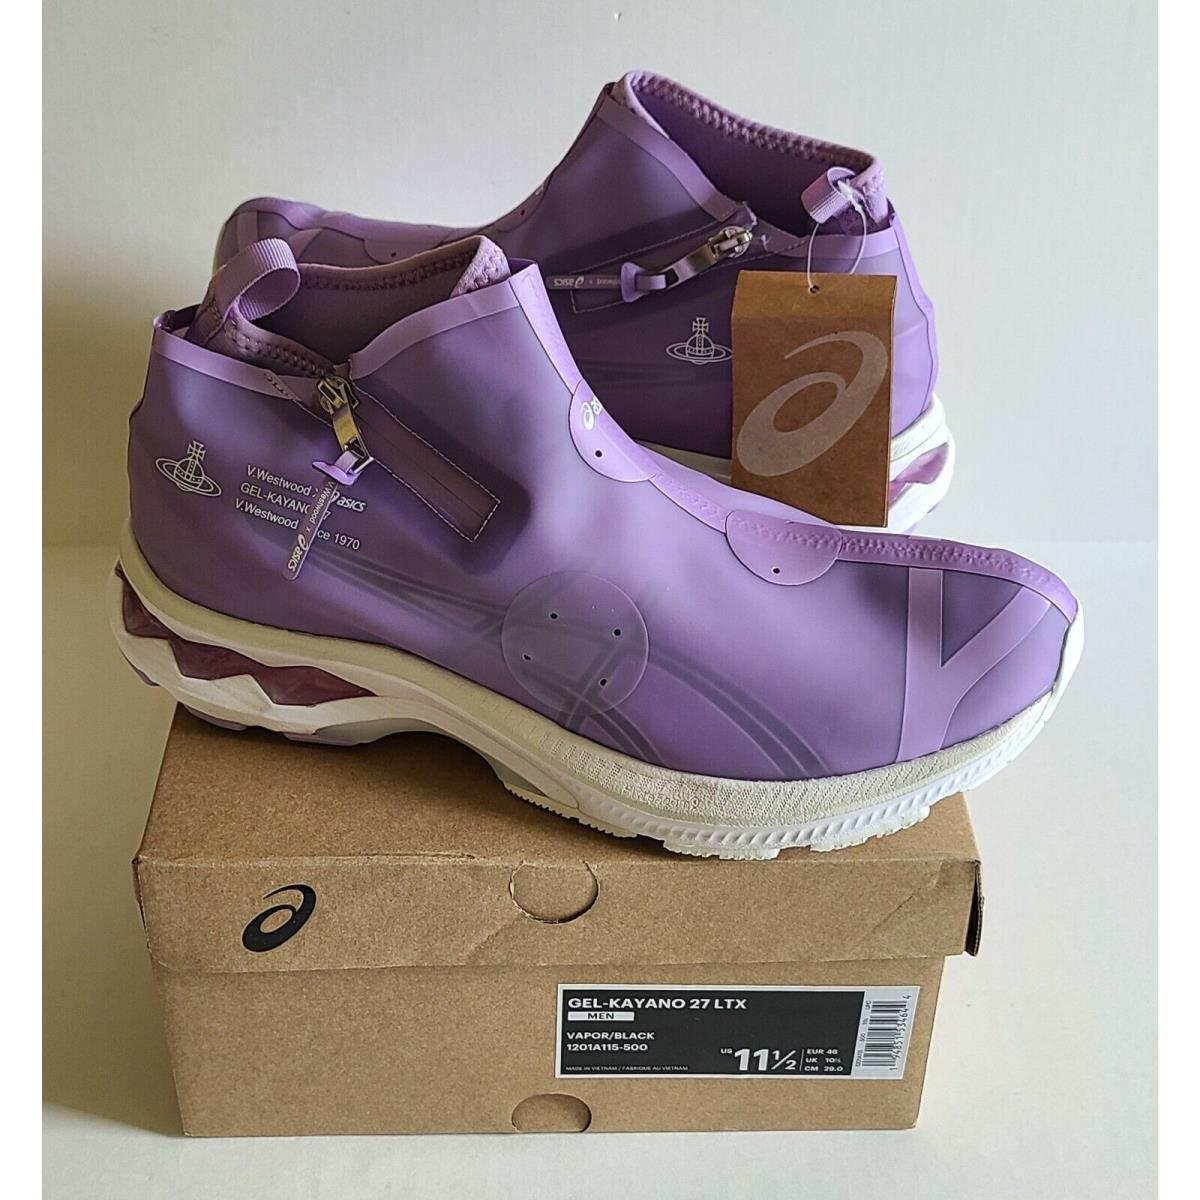 Asics x Vivienne Westwood Gel-kayano 27 Ltx Men`s Shoes Size 11.5